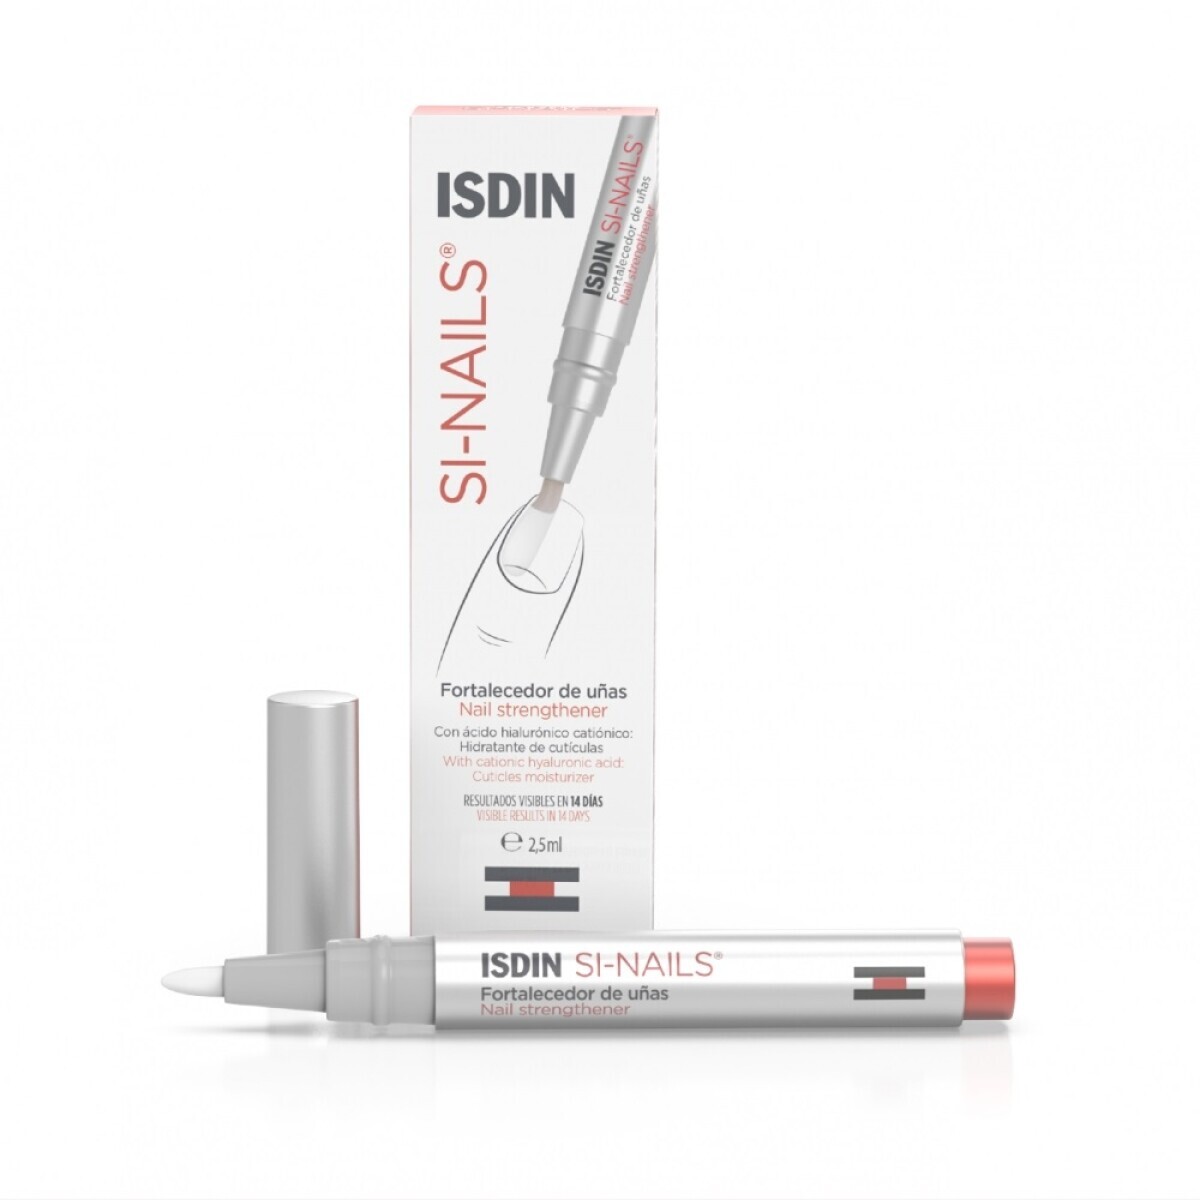 ISDIN SI-NAILS Fortalecedor de uñas e hidratante de cutículas 2,5 ml 